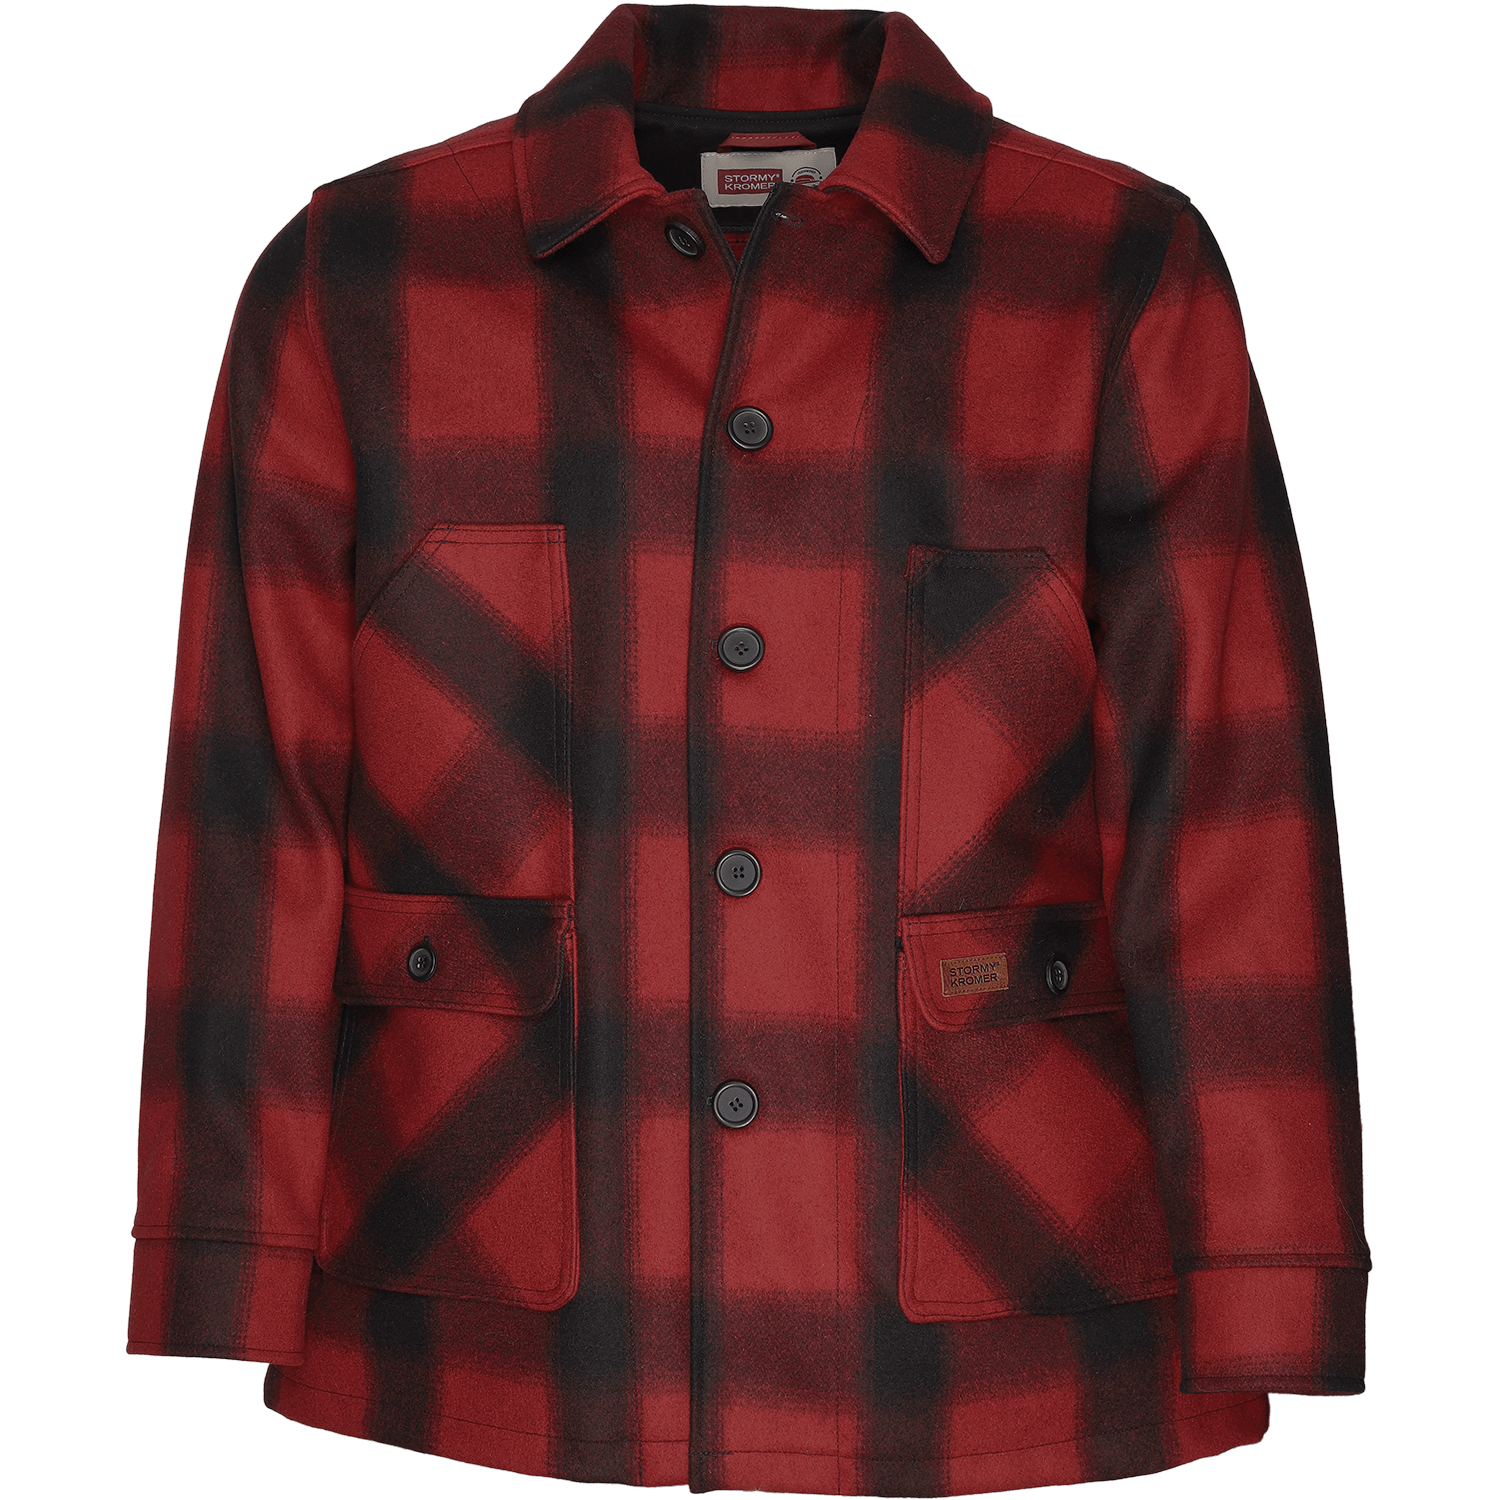 The Mackinaw Coat